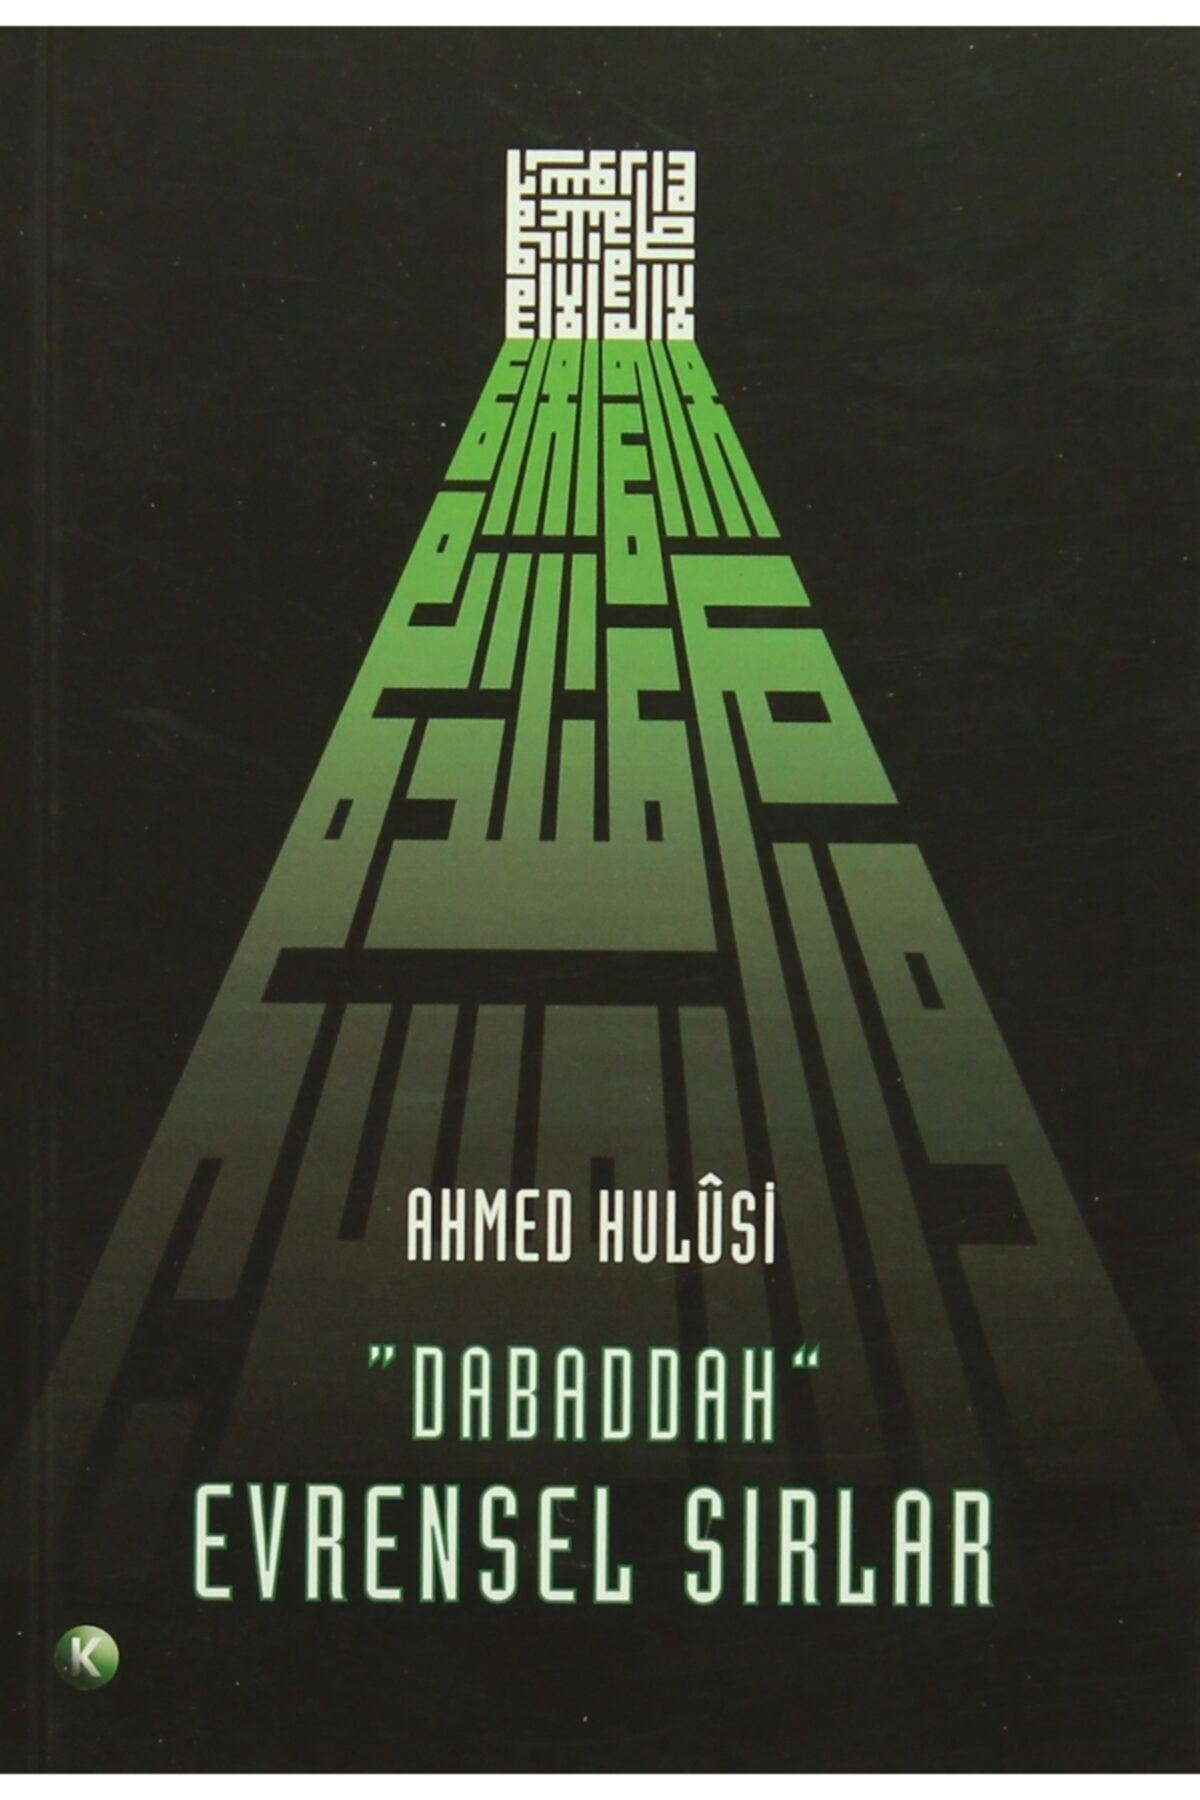 Ahmed Hulusi - Dabaddah Evrensel Sırlar